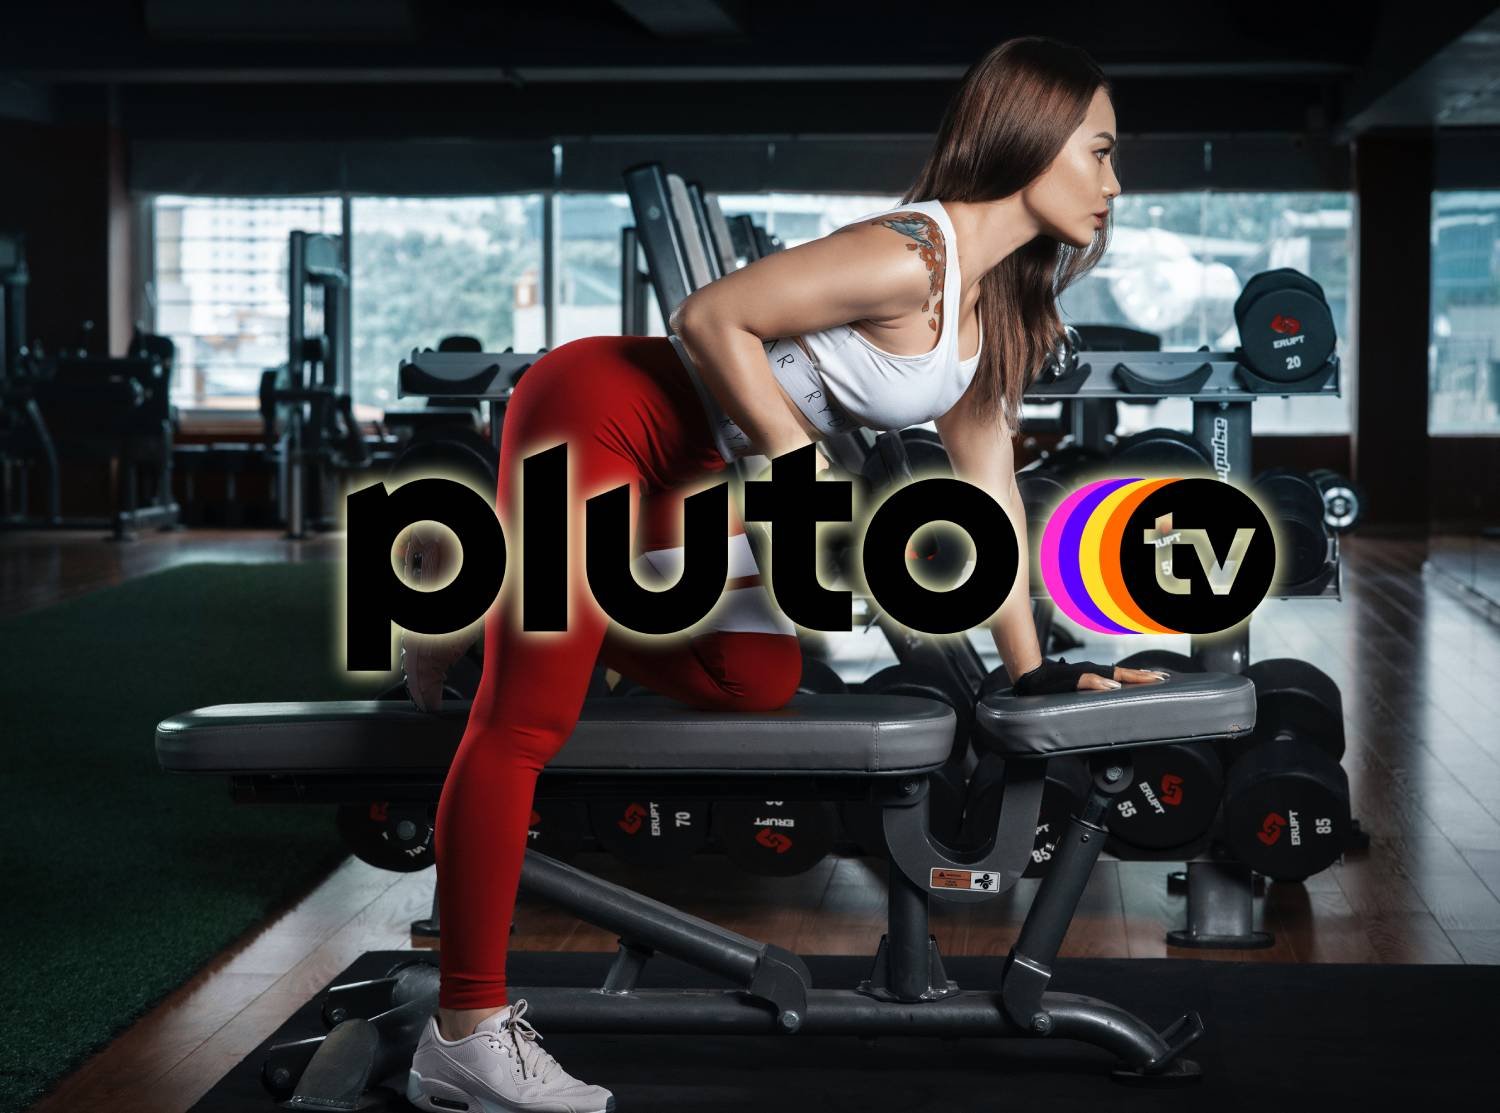 Pluto TV tele gimnasio